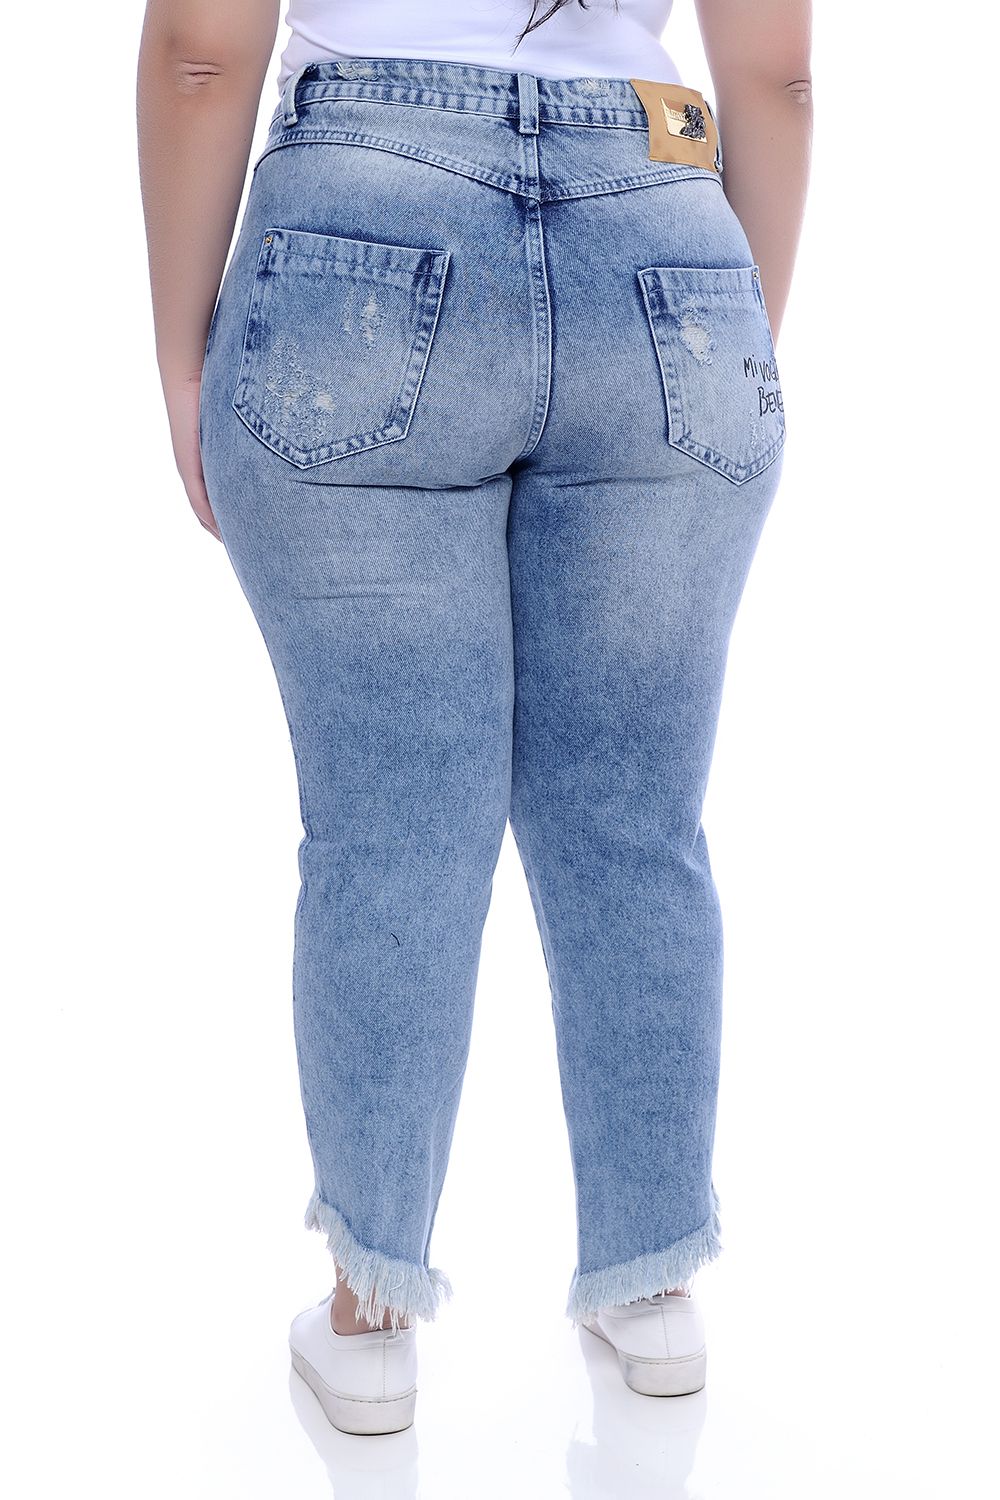 Calça jeans feminina boyfriend alta Plus Size - Loja Lafa Moda Plus -  Compre Moda Femininas Plus Sizes